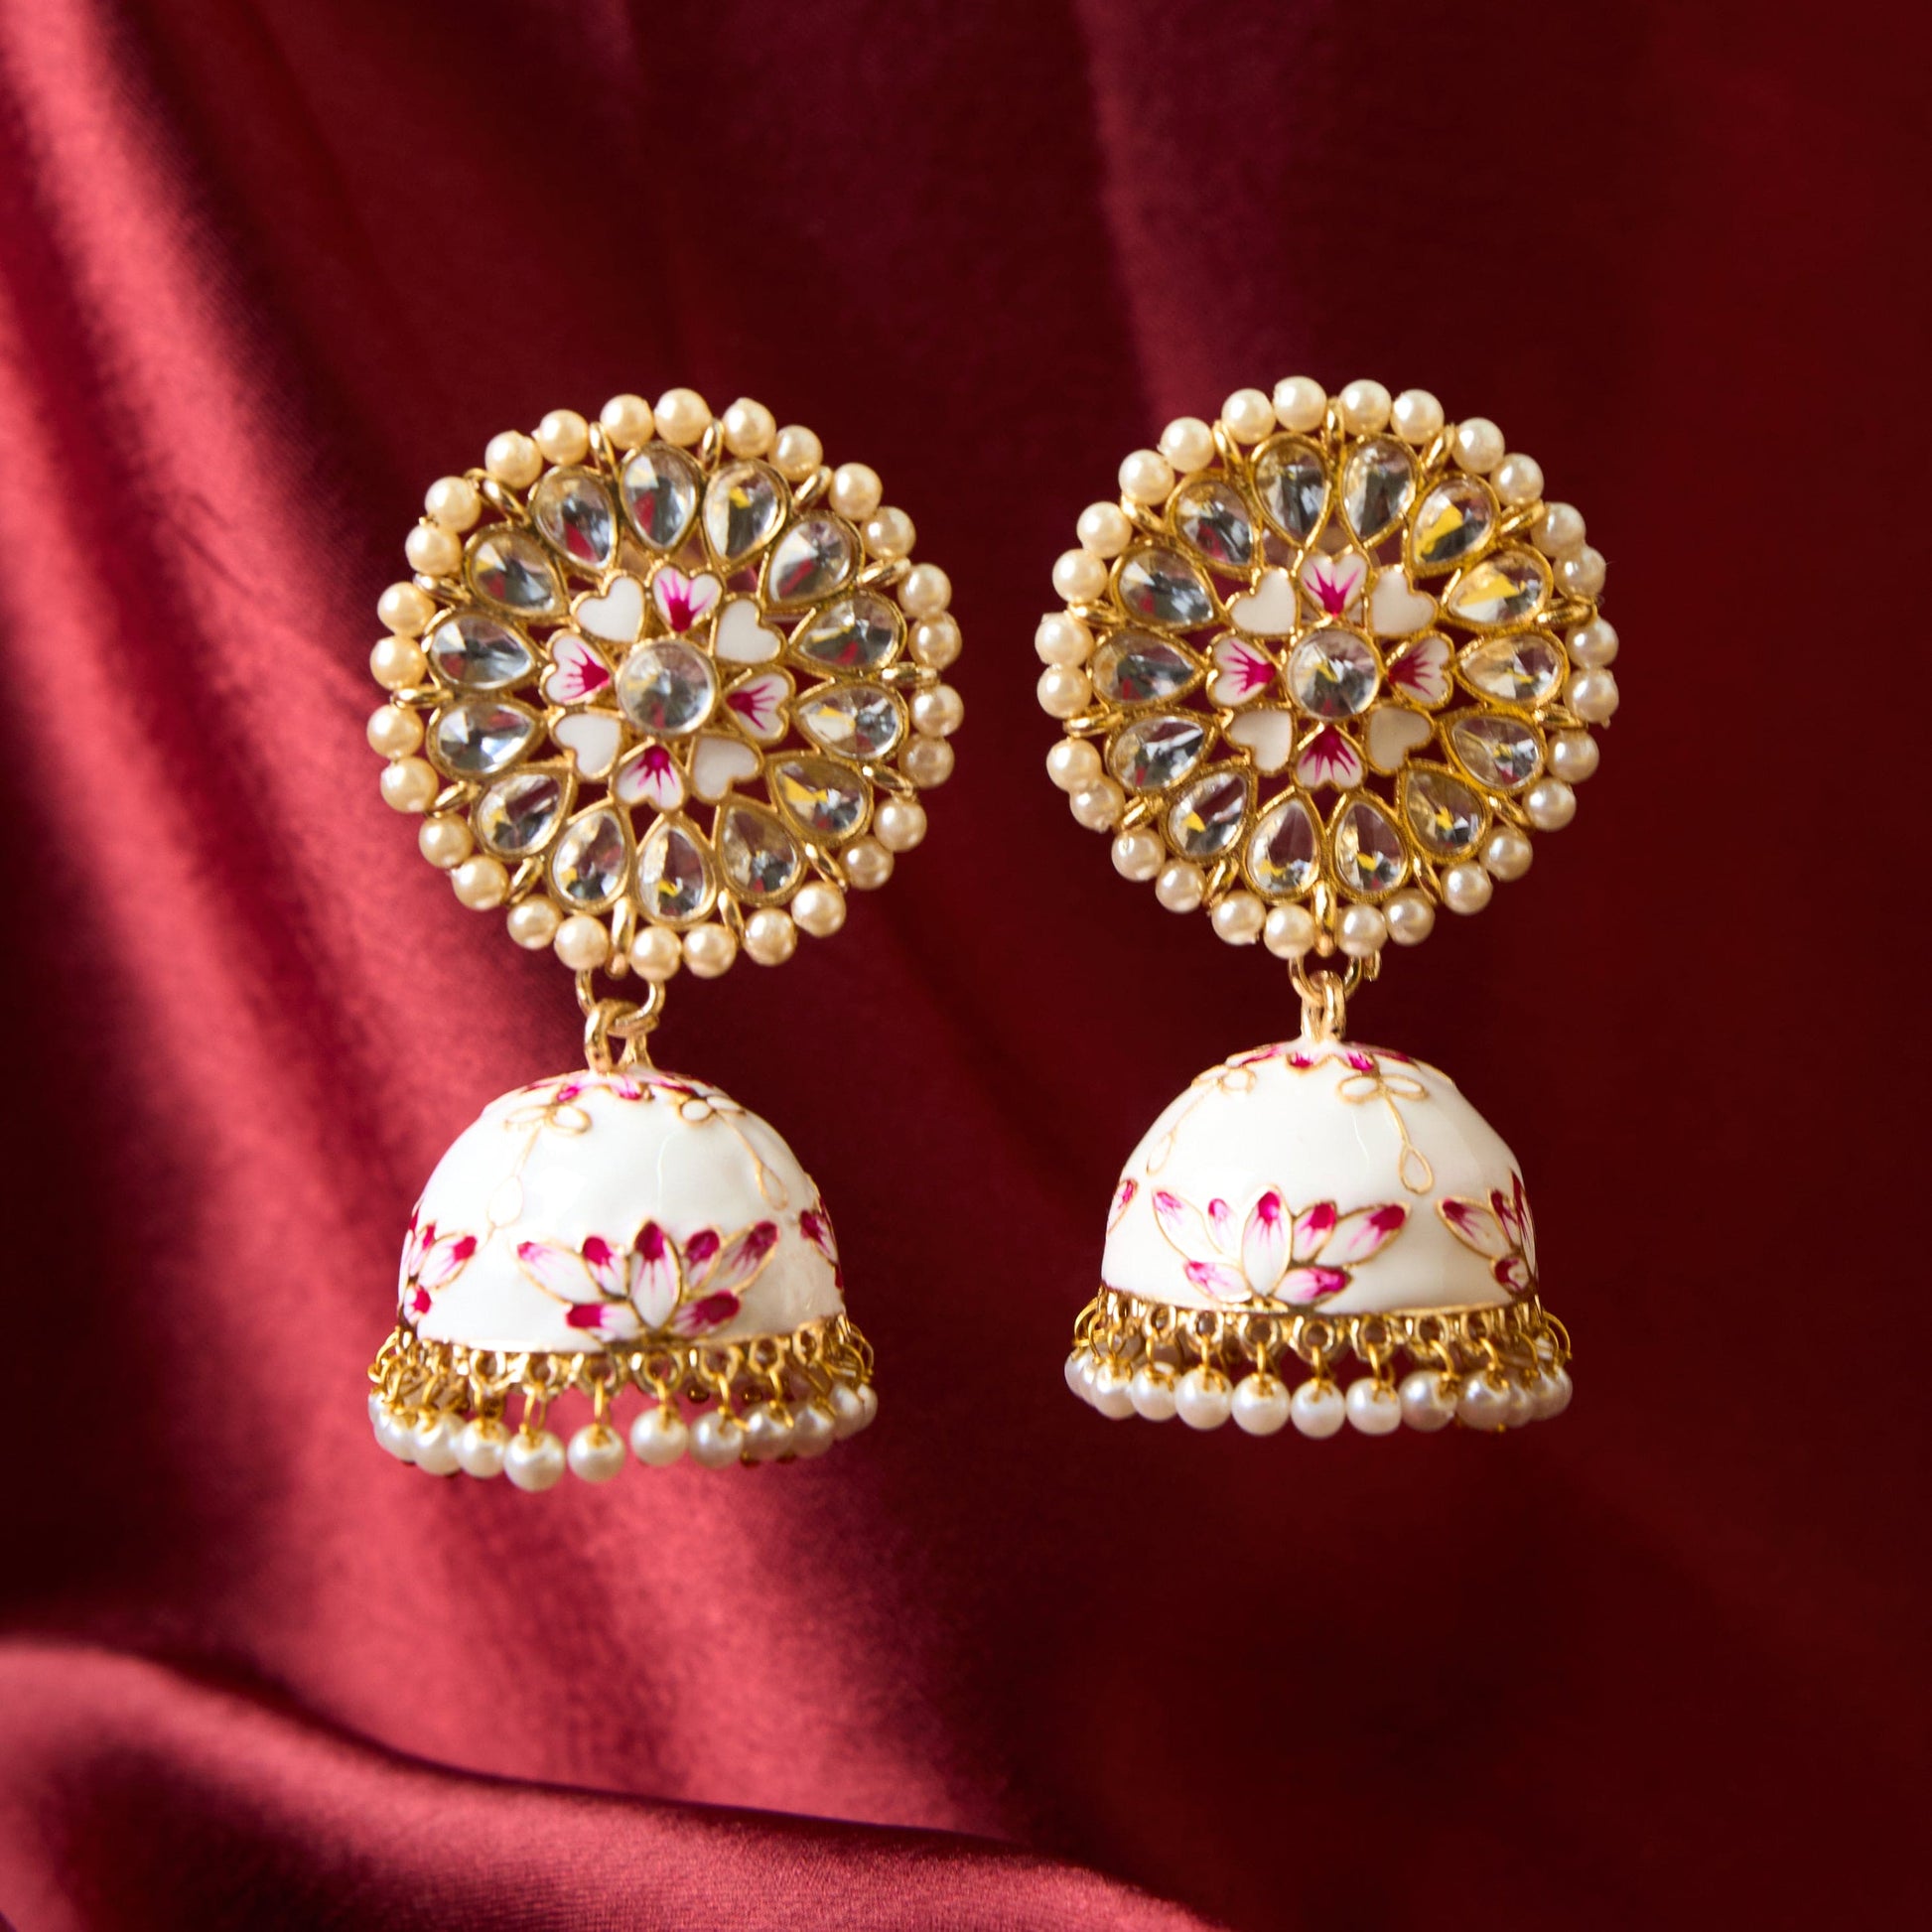 Moonstruck Traditional Indian Dome Shaped Lightweight Golden Jhumka/Jhumki Dangle Drop Earrings with Meenakari & Pearls for Women (White & Pink) - www.MoonstruckINC.com